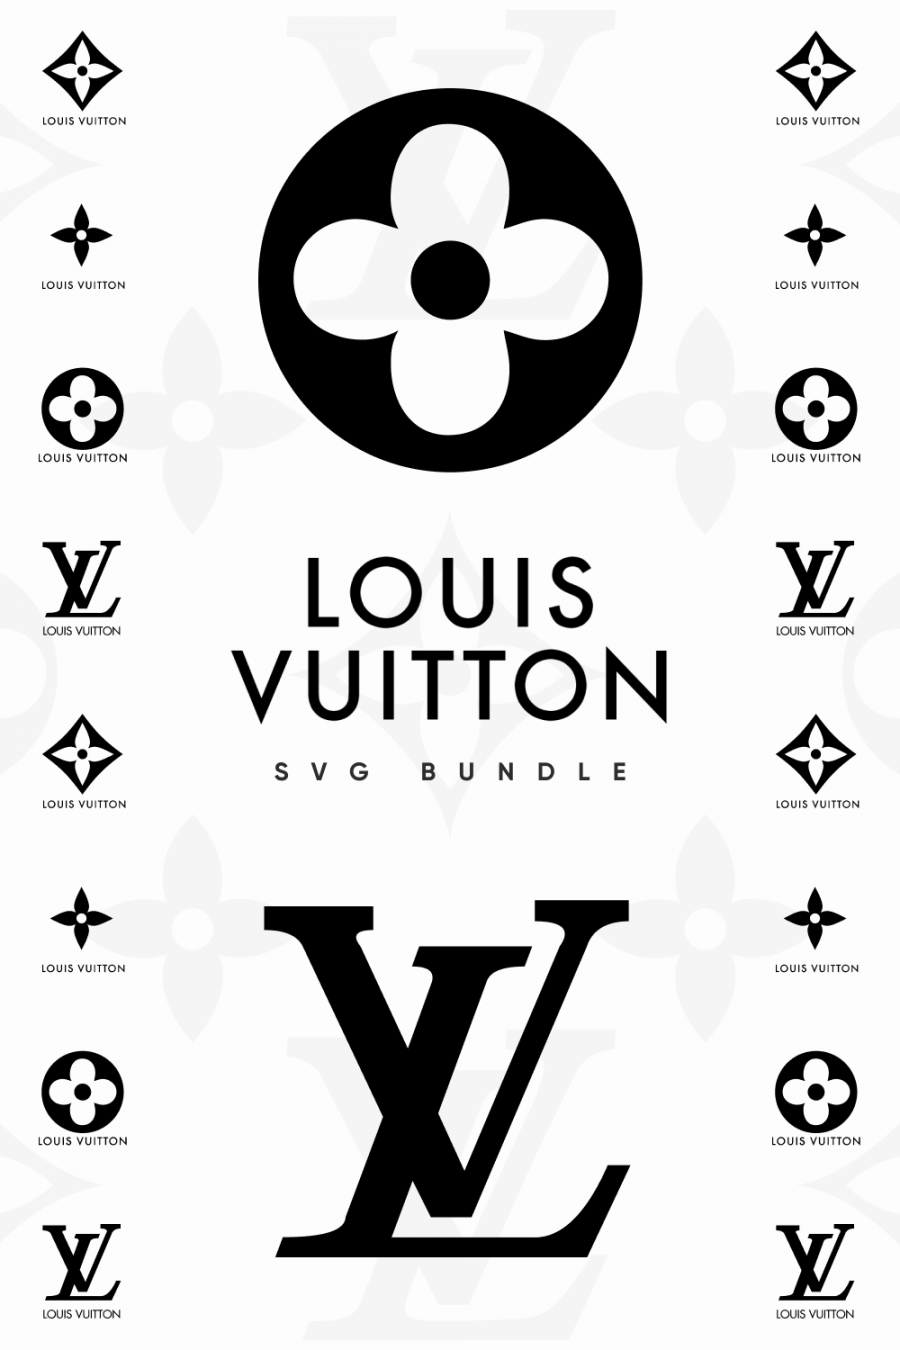 Louis Vuitton SVG Bundle - FREE Printables - Printable Louis Vuitton Svg Free